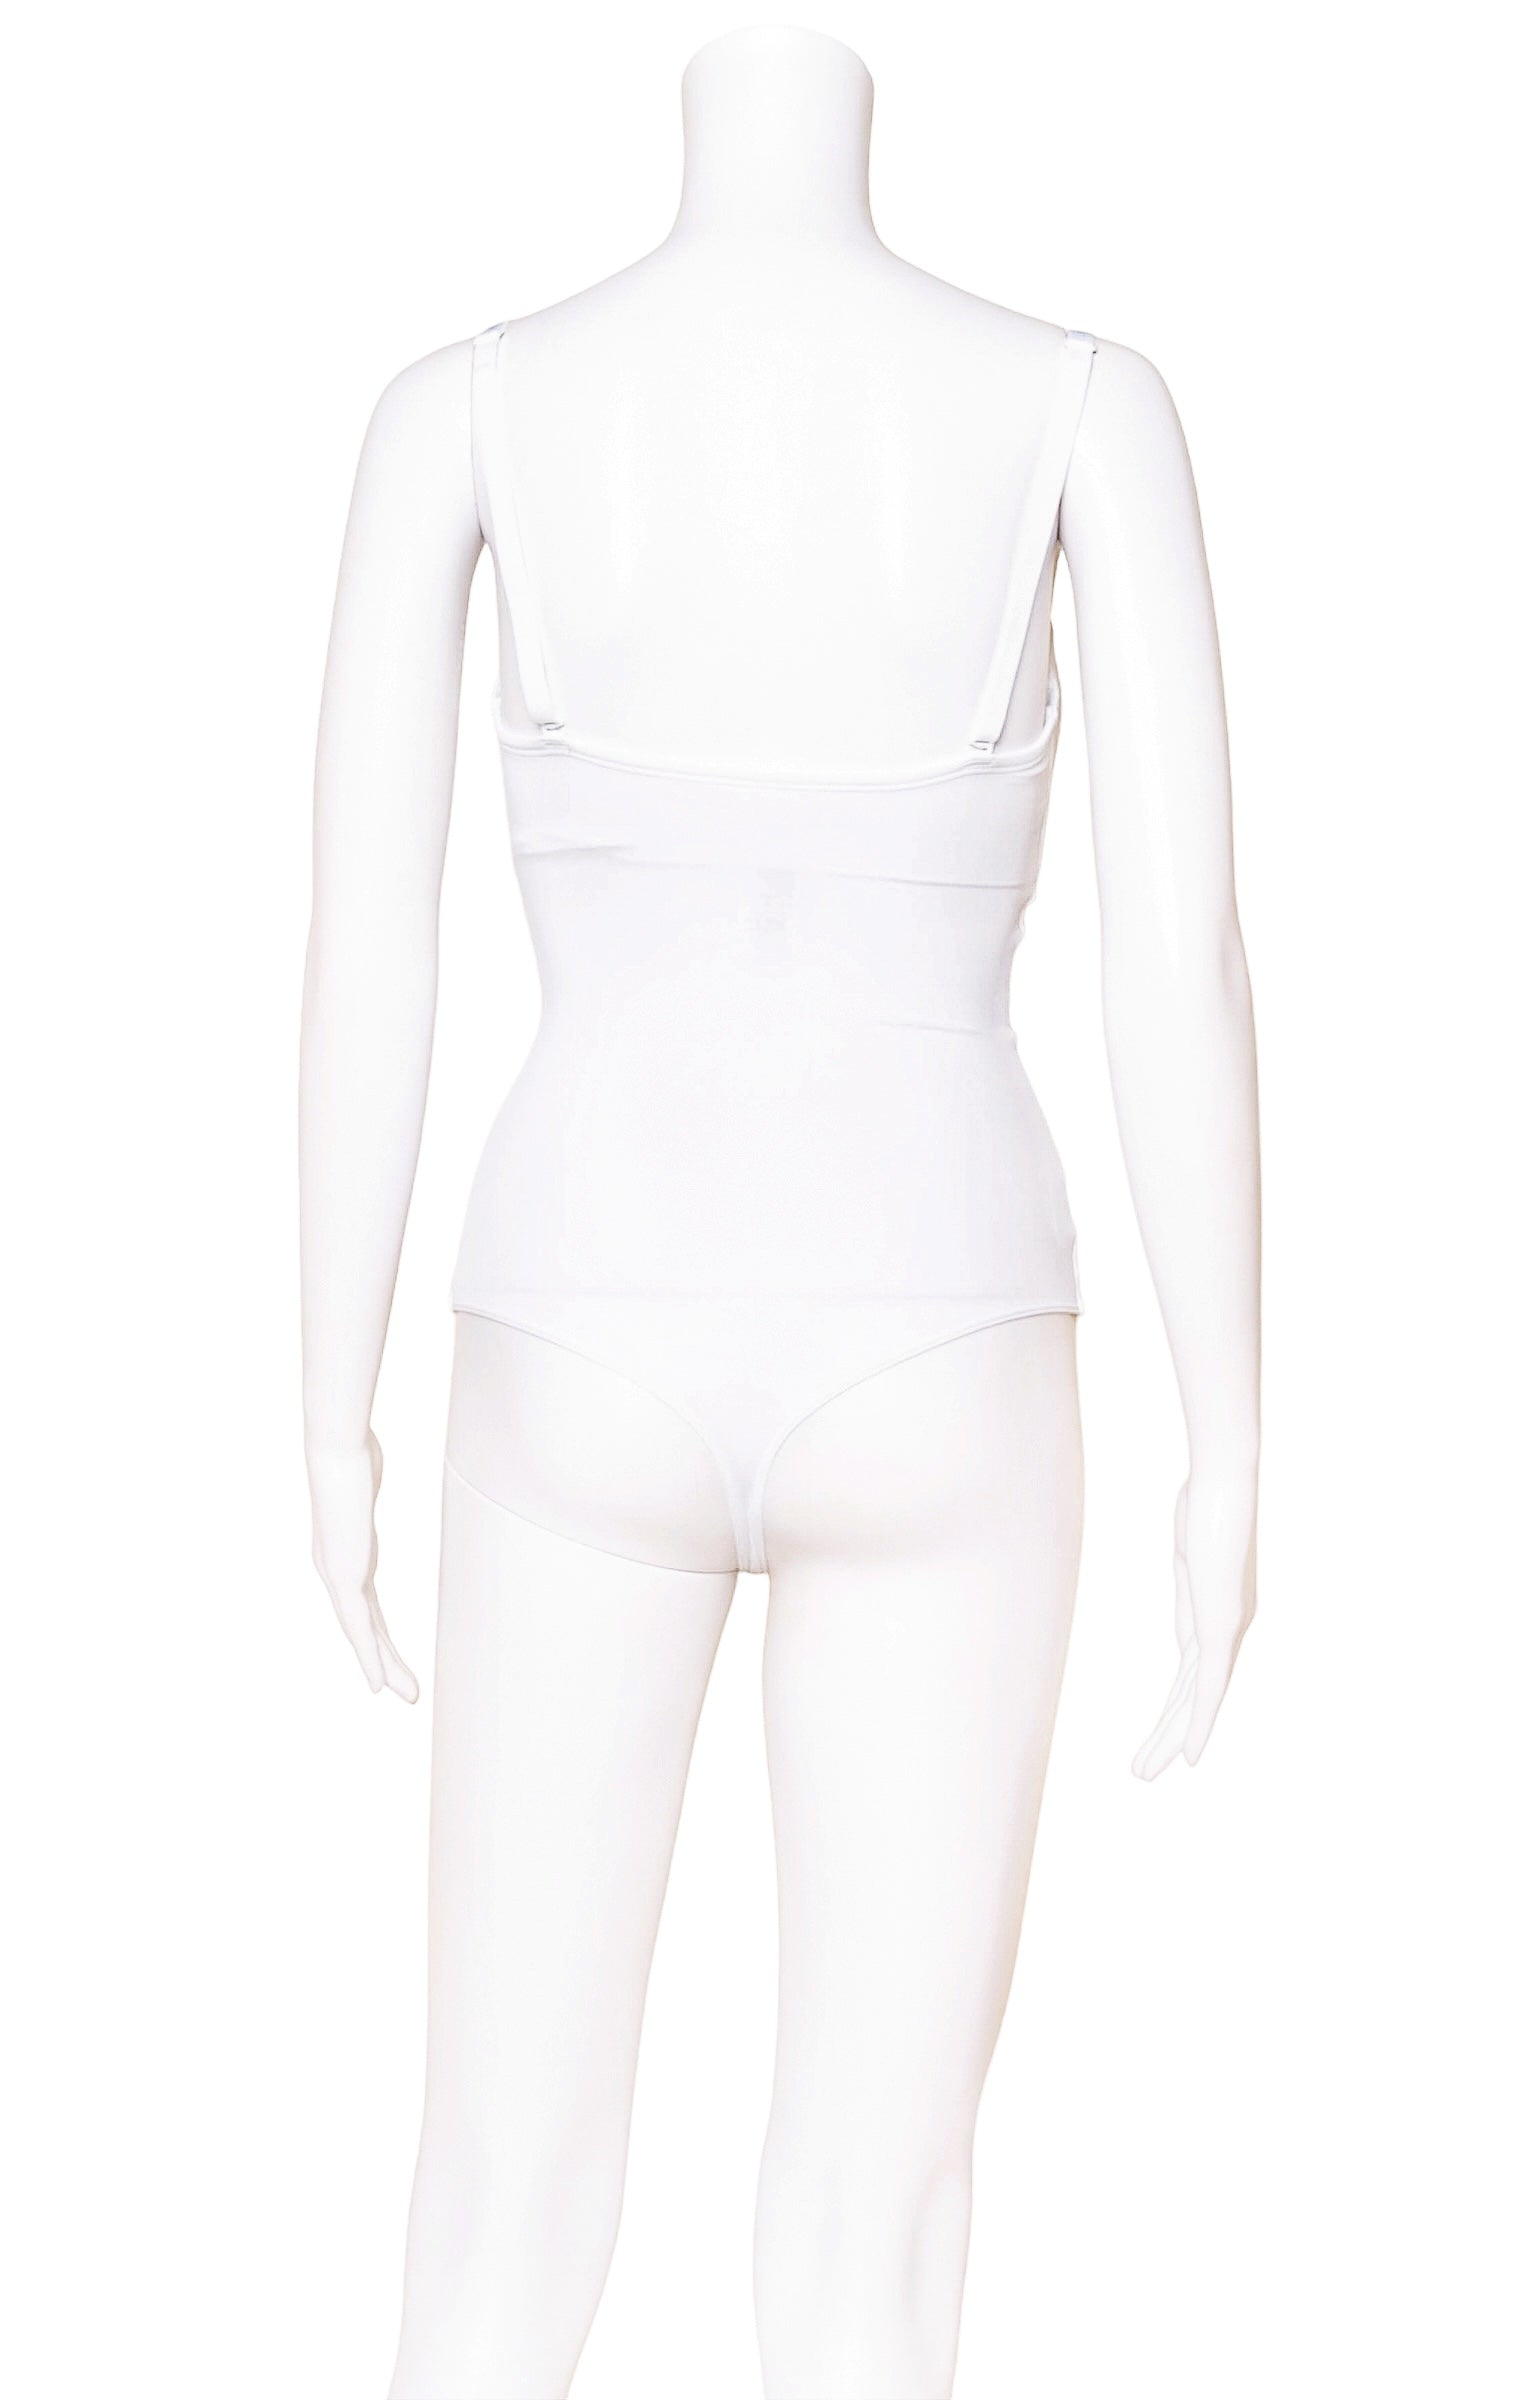 WOLFORD Bodysuit / Shapewear Size: M / D Cup – Kardashian Kloset